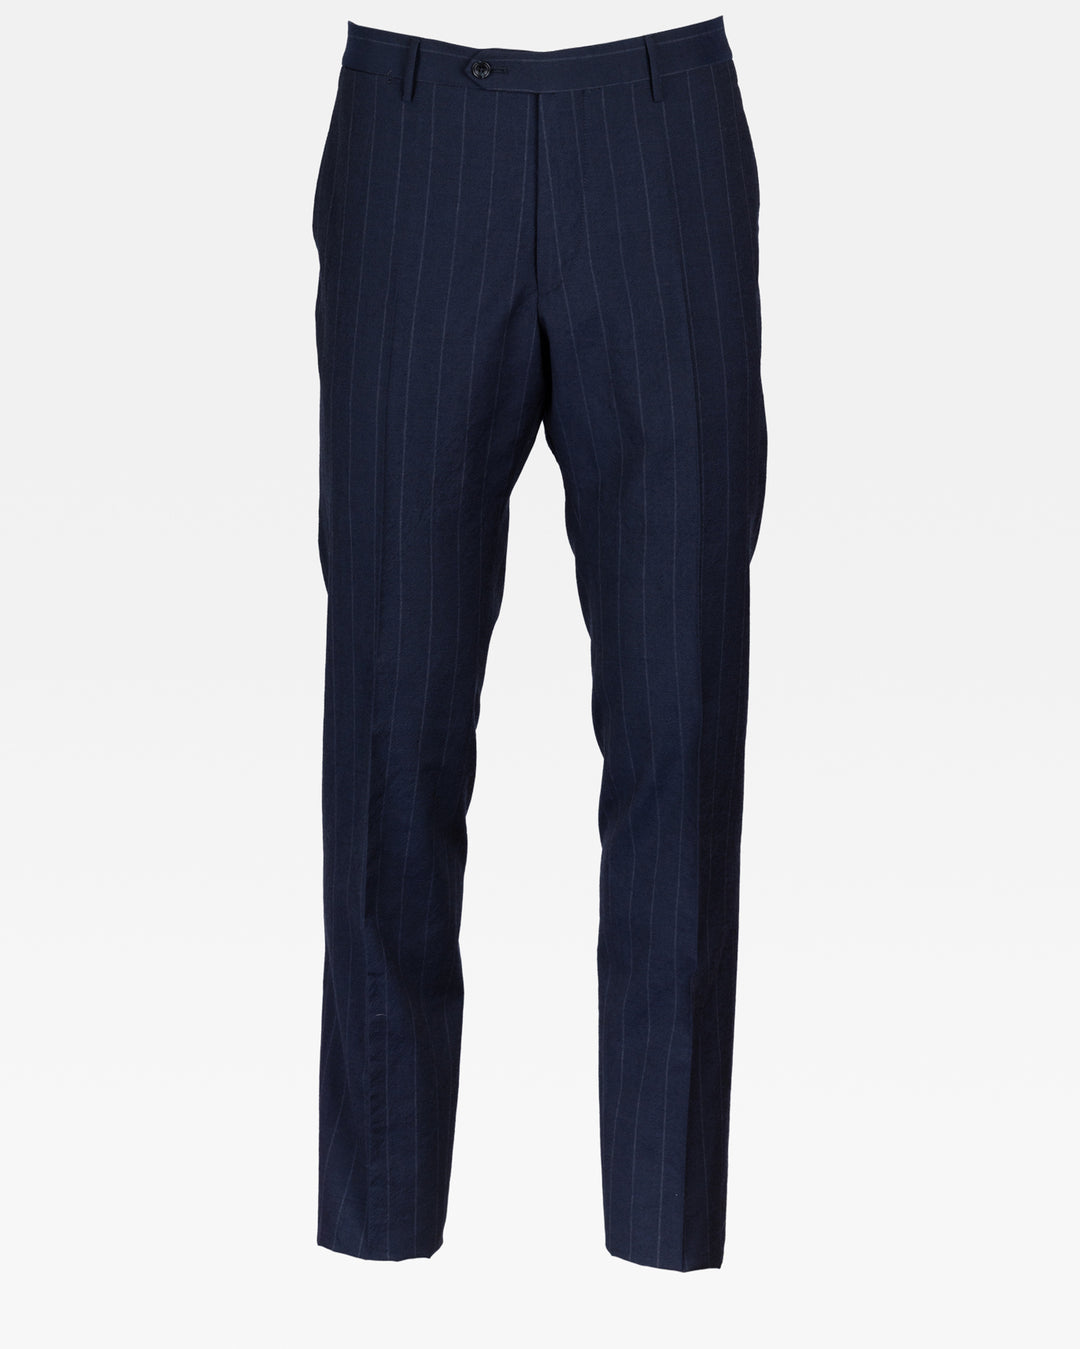 Montecarlo Suit - Navy Stripe